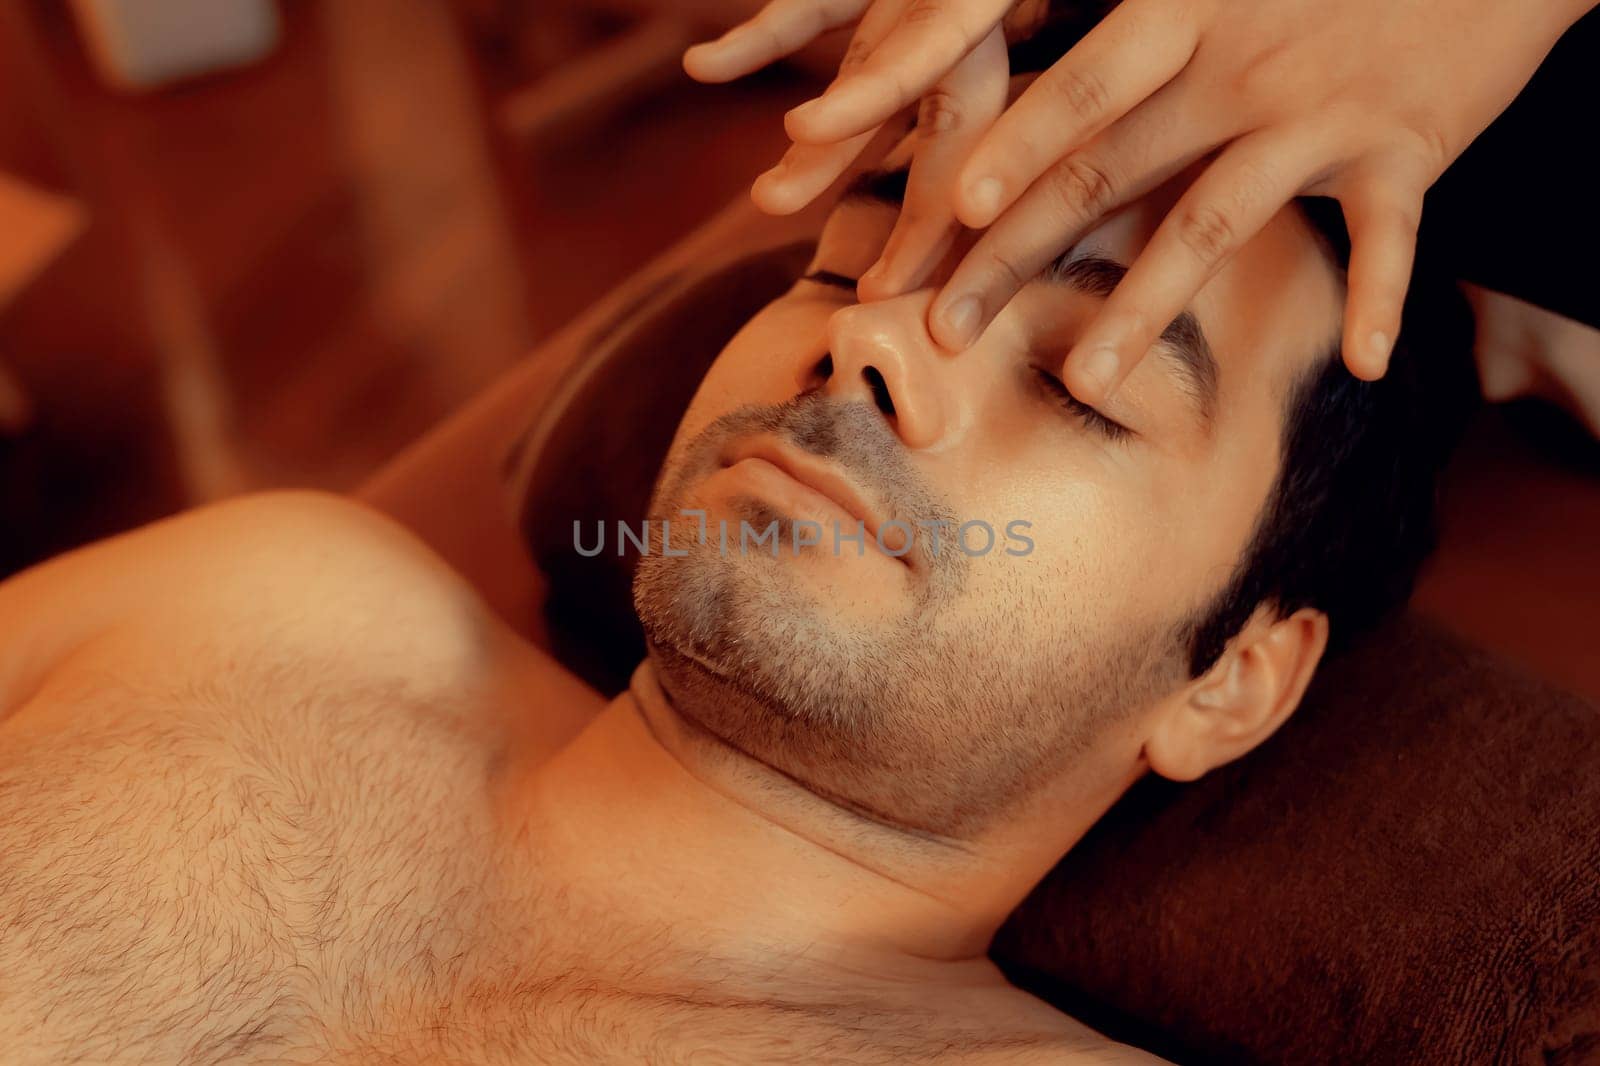 Caucasian man enjoying relaxing anti-stress head massage. Quiescent by biancoblue